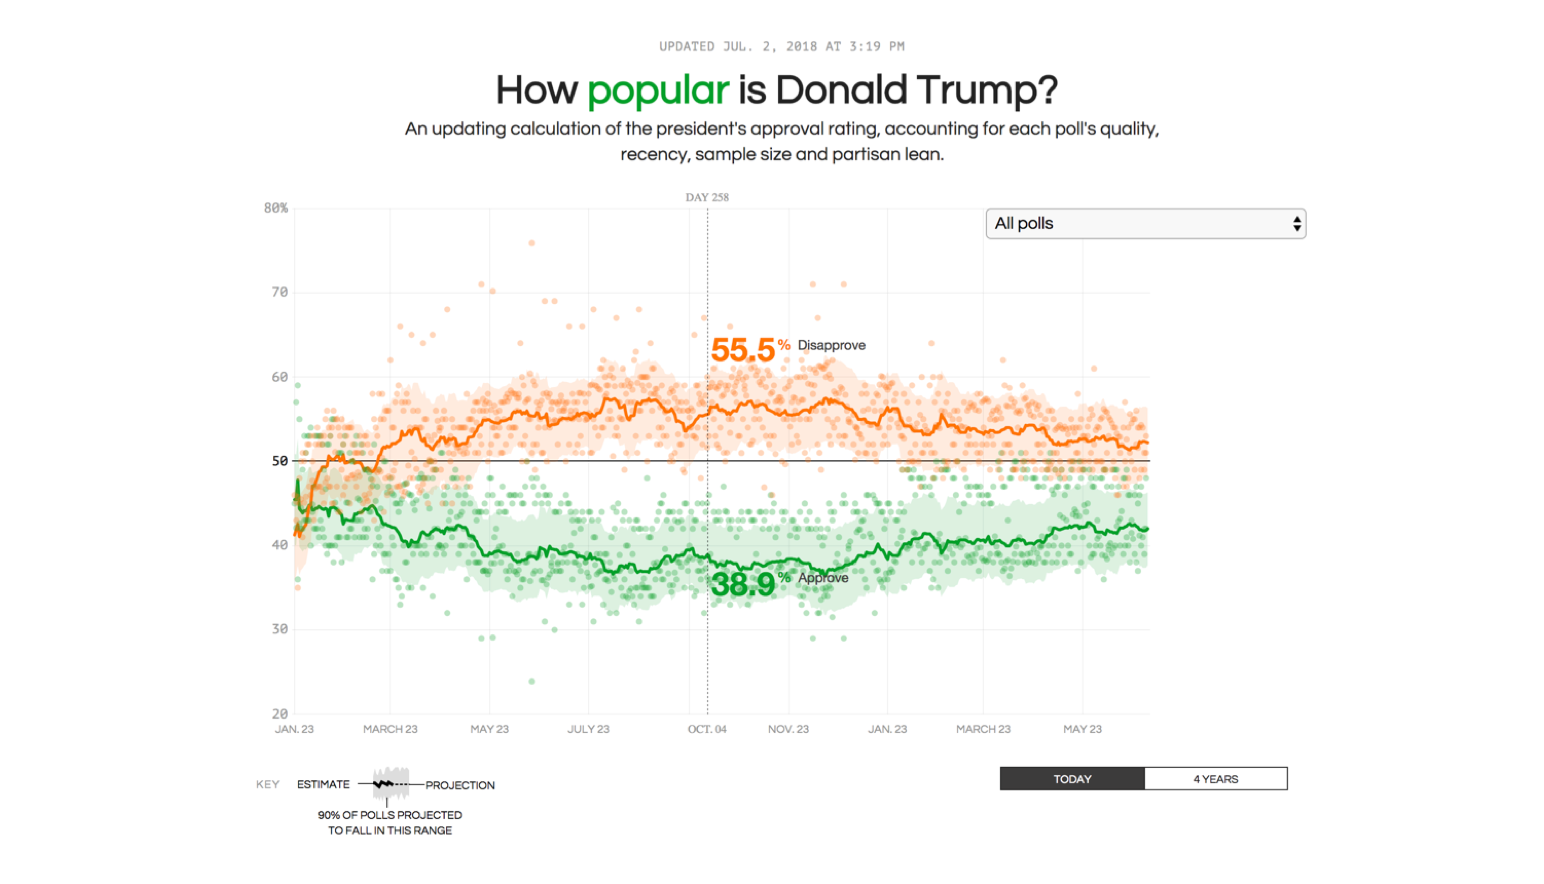 Popularity of Donald Trump